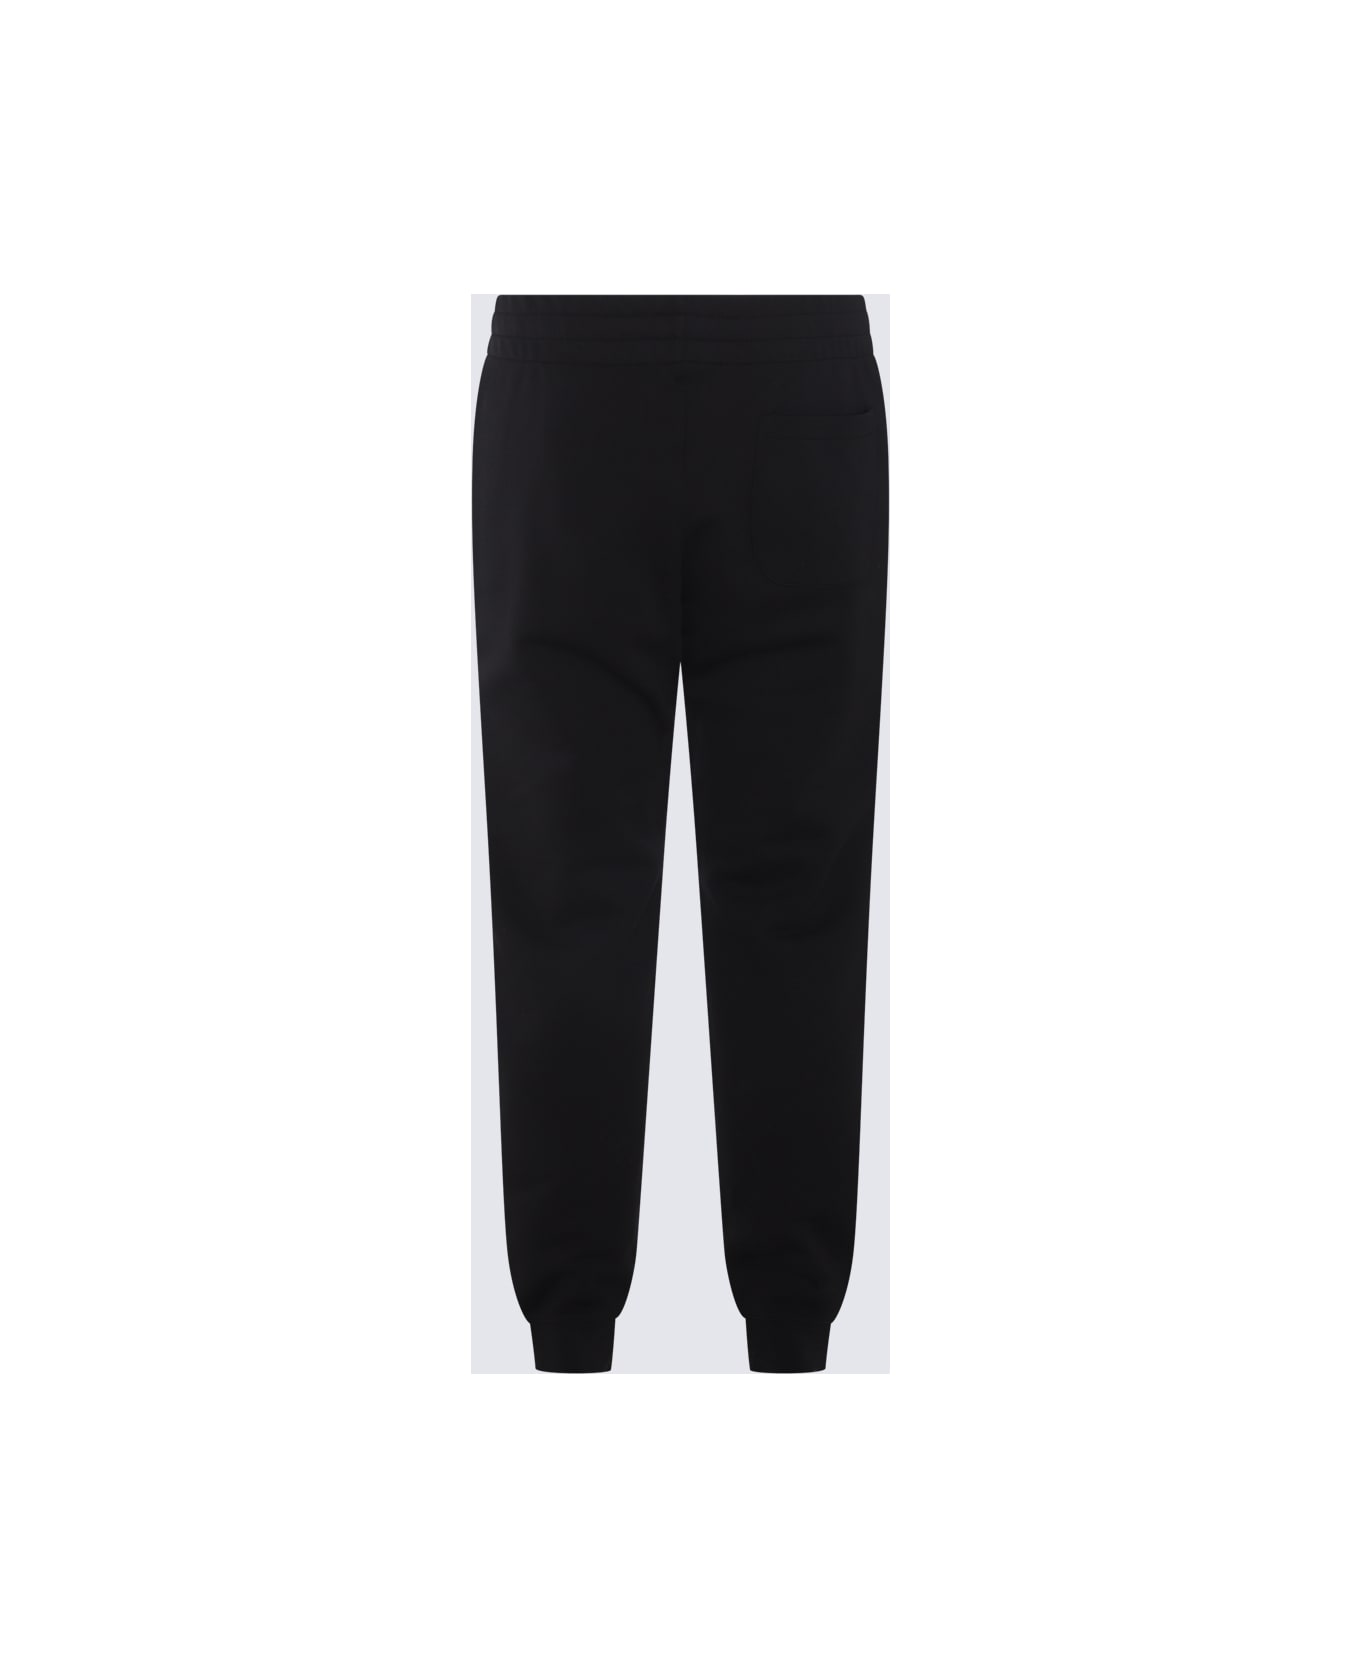 Moschino Black Cotton Pants - Black スウェットパンツ